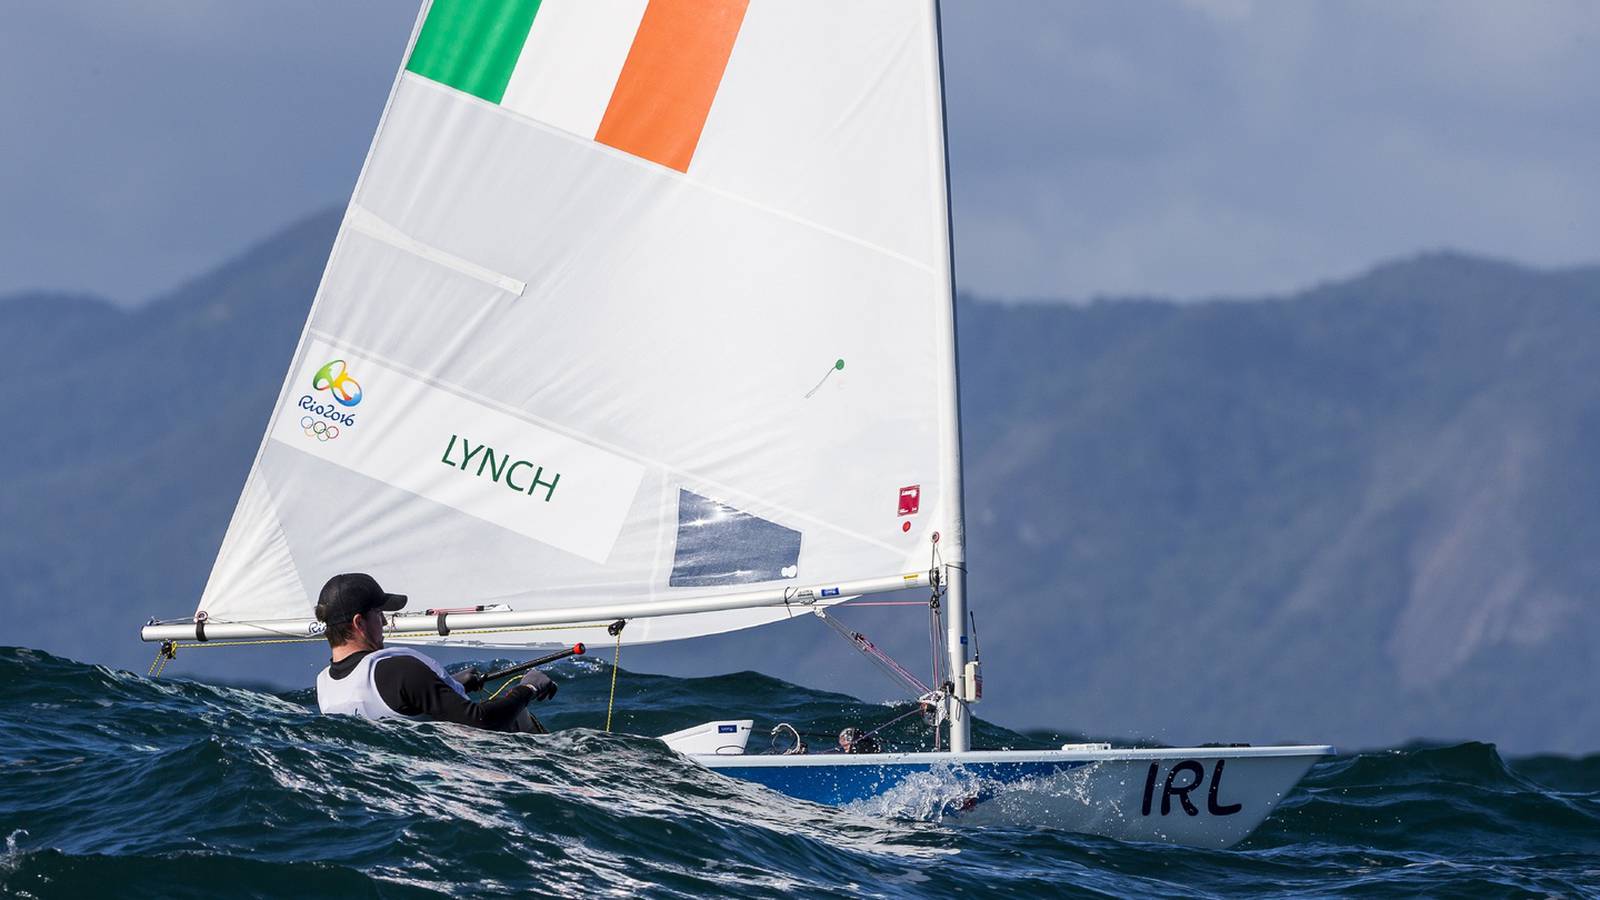 Finn Lynch flying the flag at Laser World Championships – The Irish Times